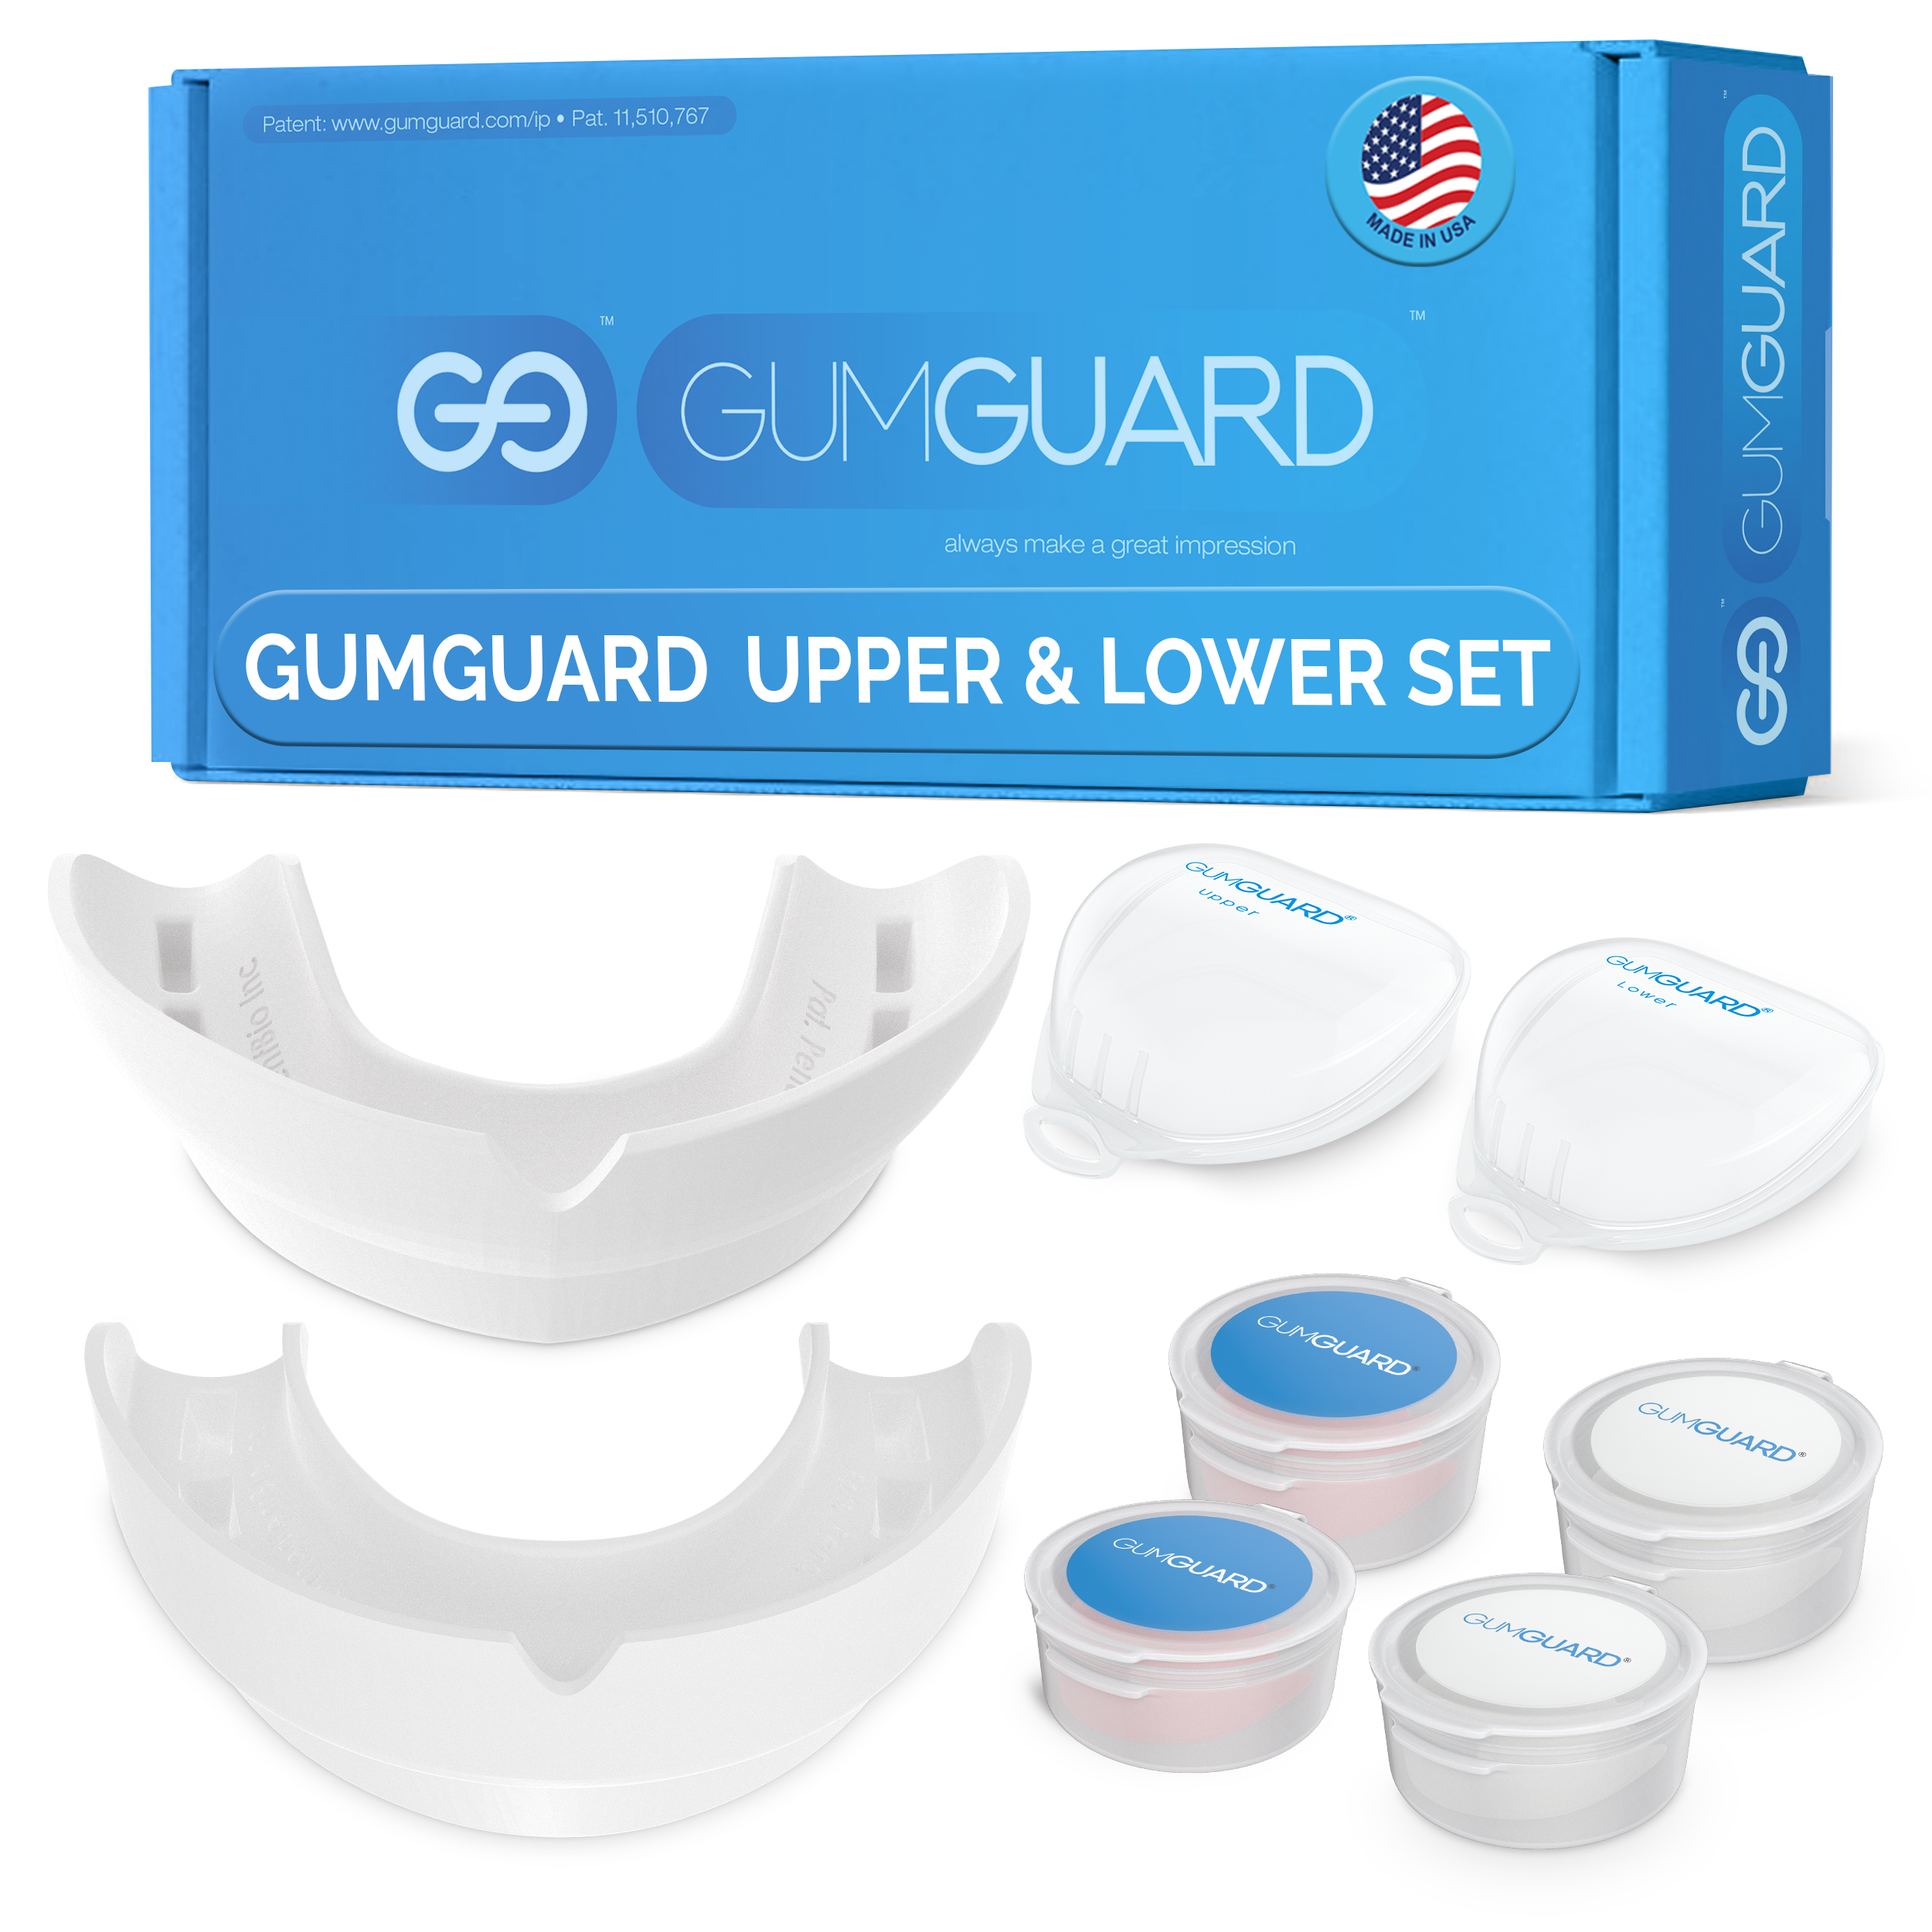 GumGuard® PM UltraSoft Upper & Lower | White